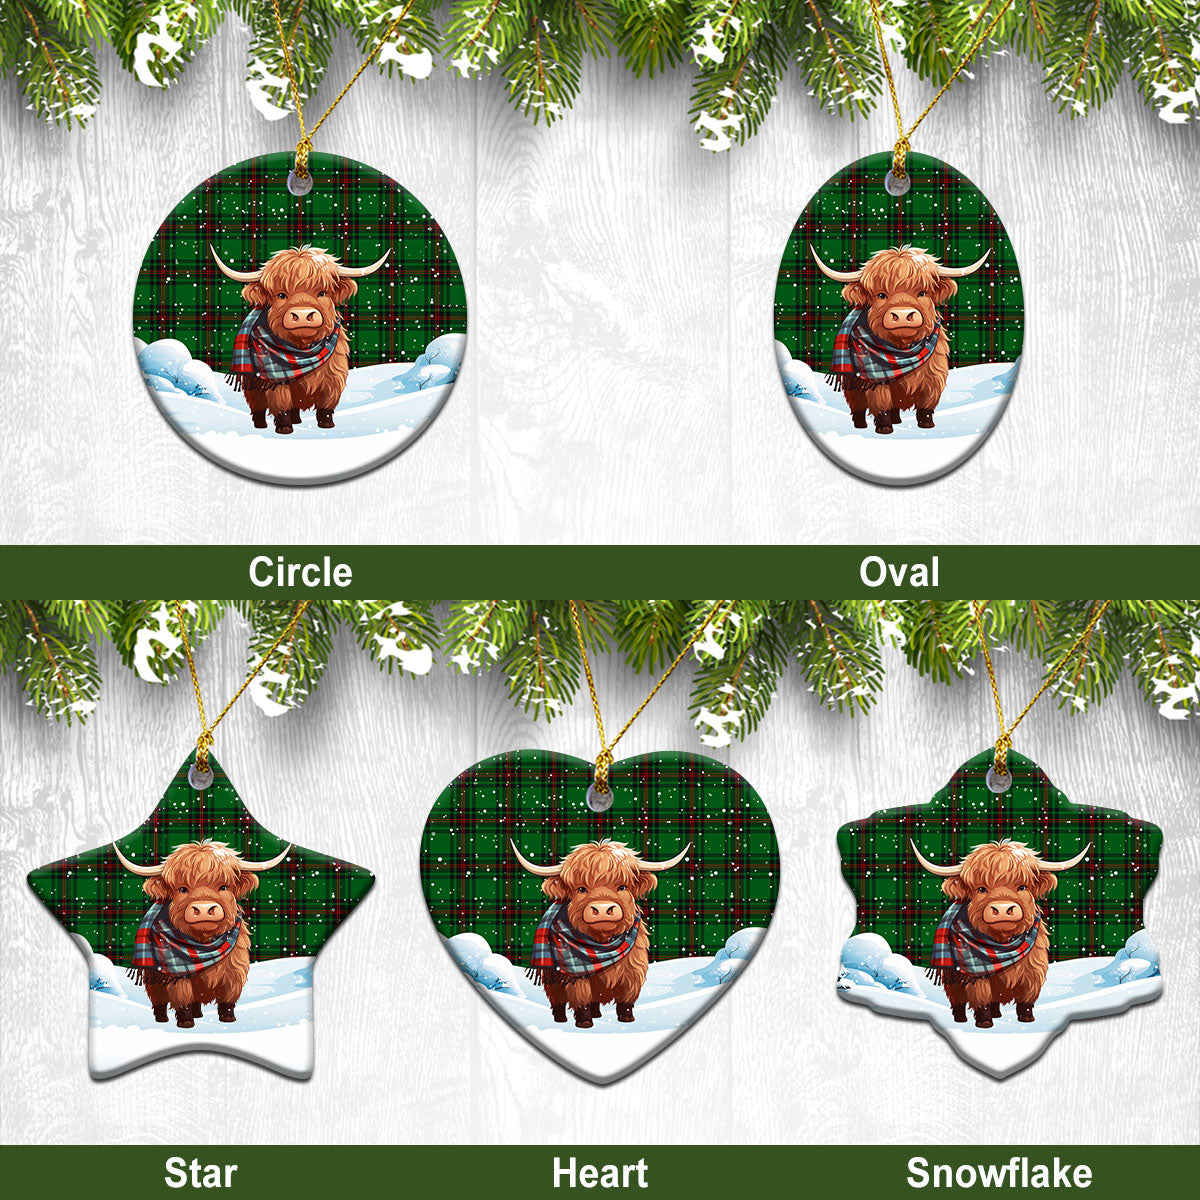 Orrock Tartan Christmas Ceramic Ornament - Highland Cows Snow Style